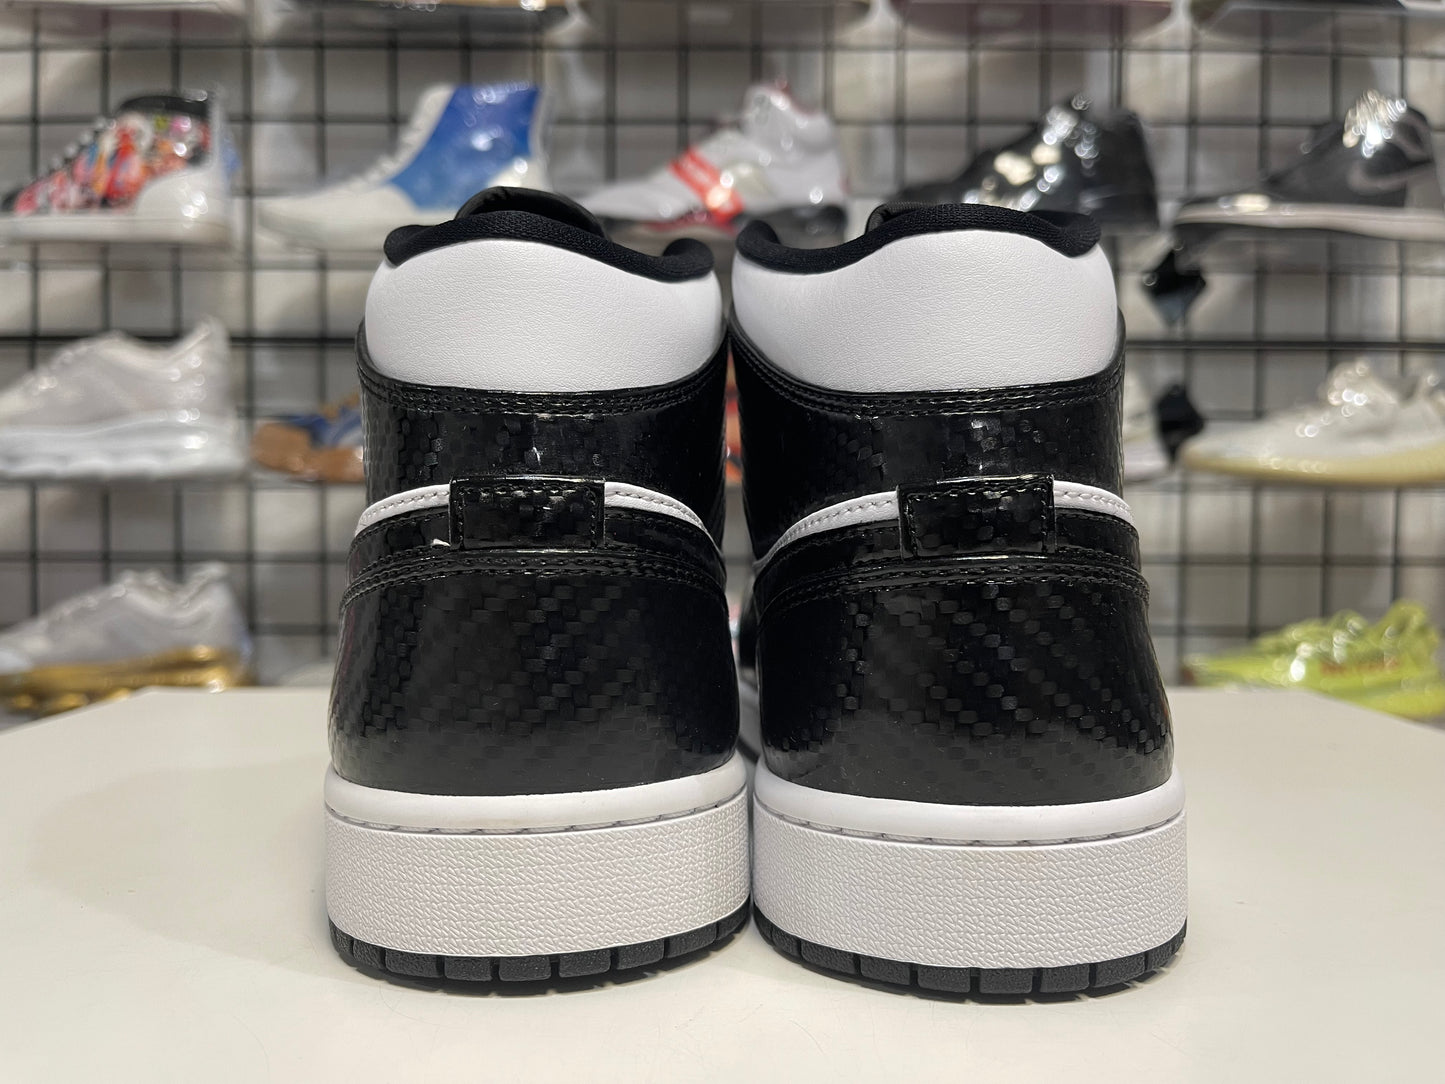 Brand New Jordan 1 Mid Carbon Fiber size 13